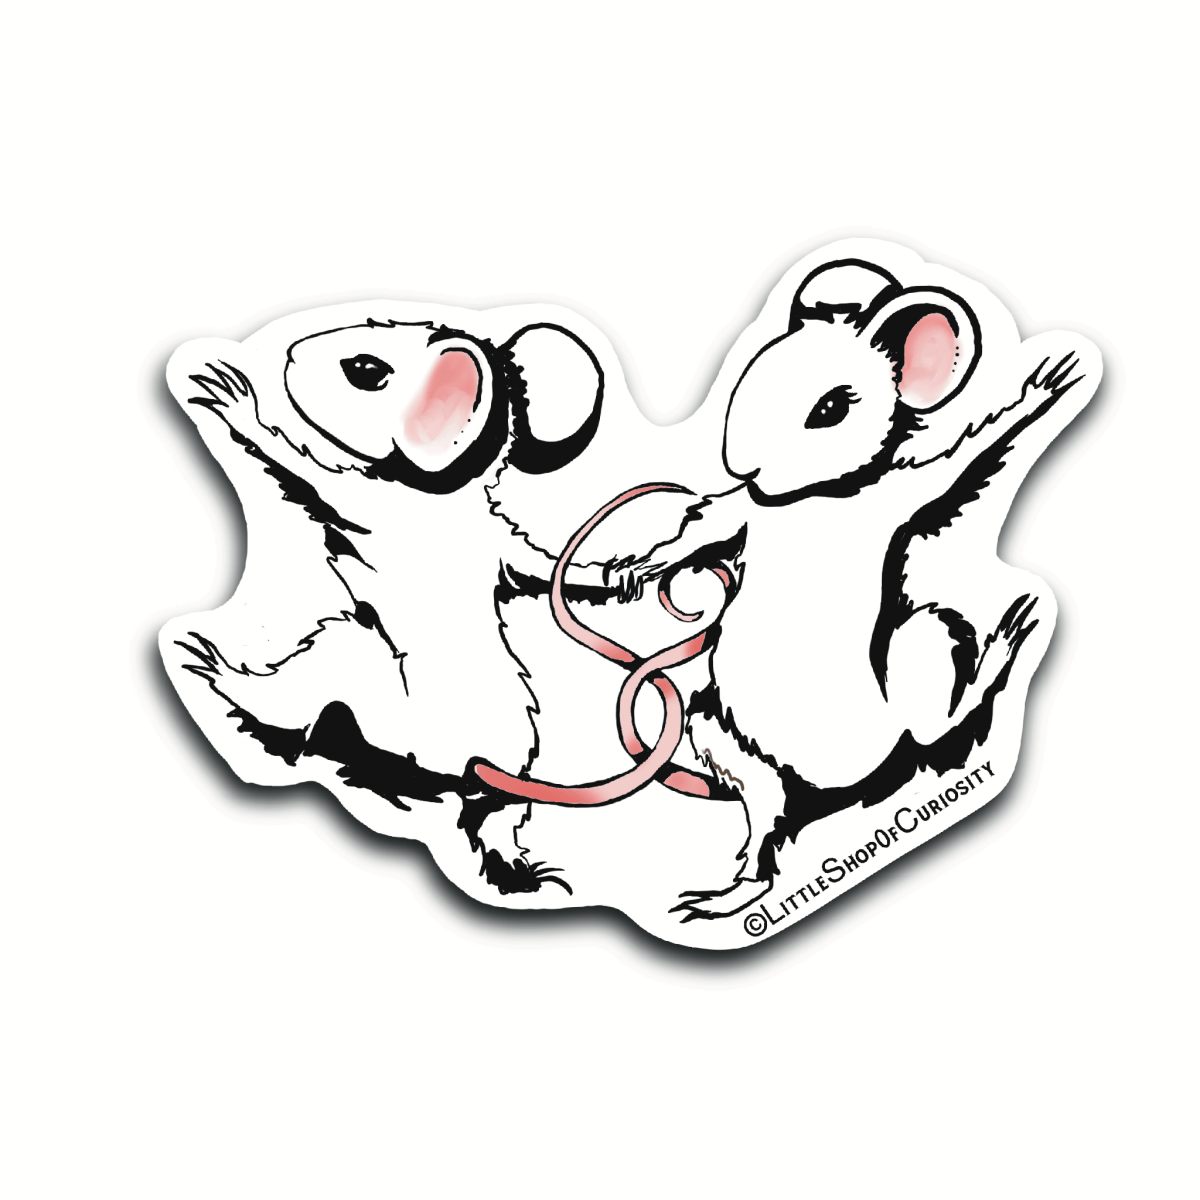 Dancing Mice Sticker - Colour Sticker - Little Shop of Curiosity